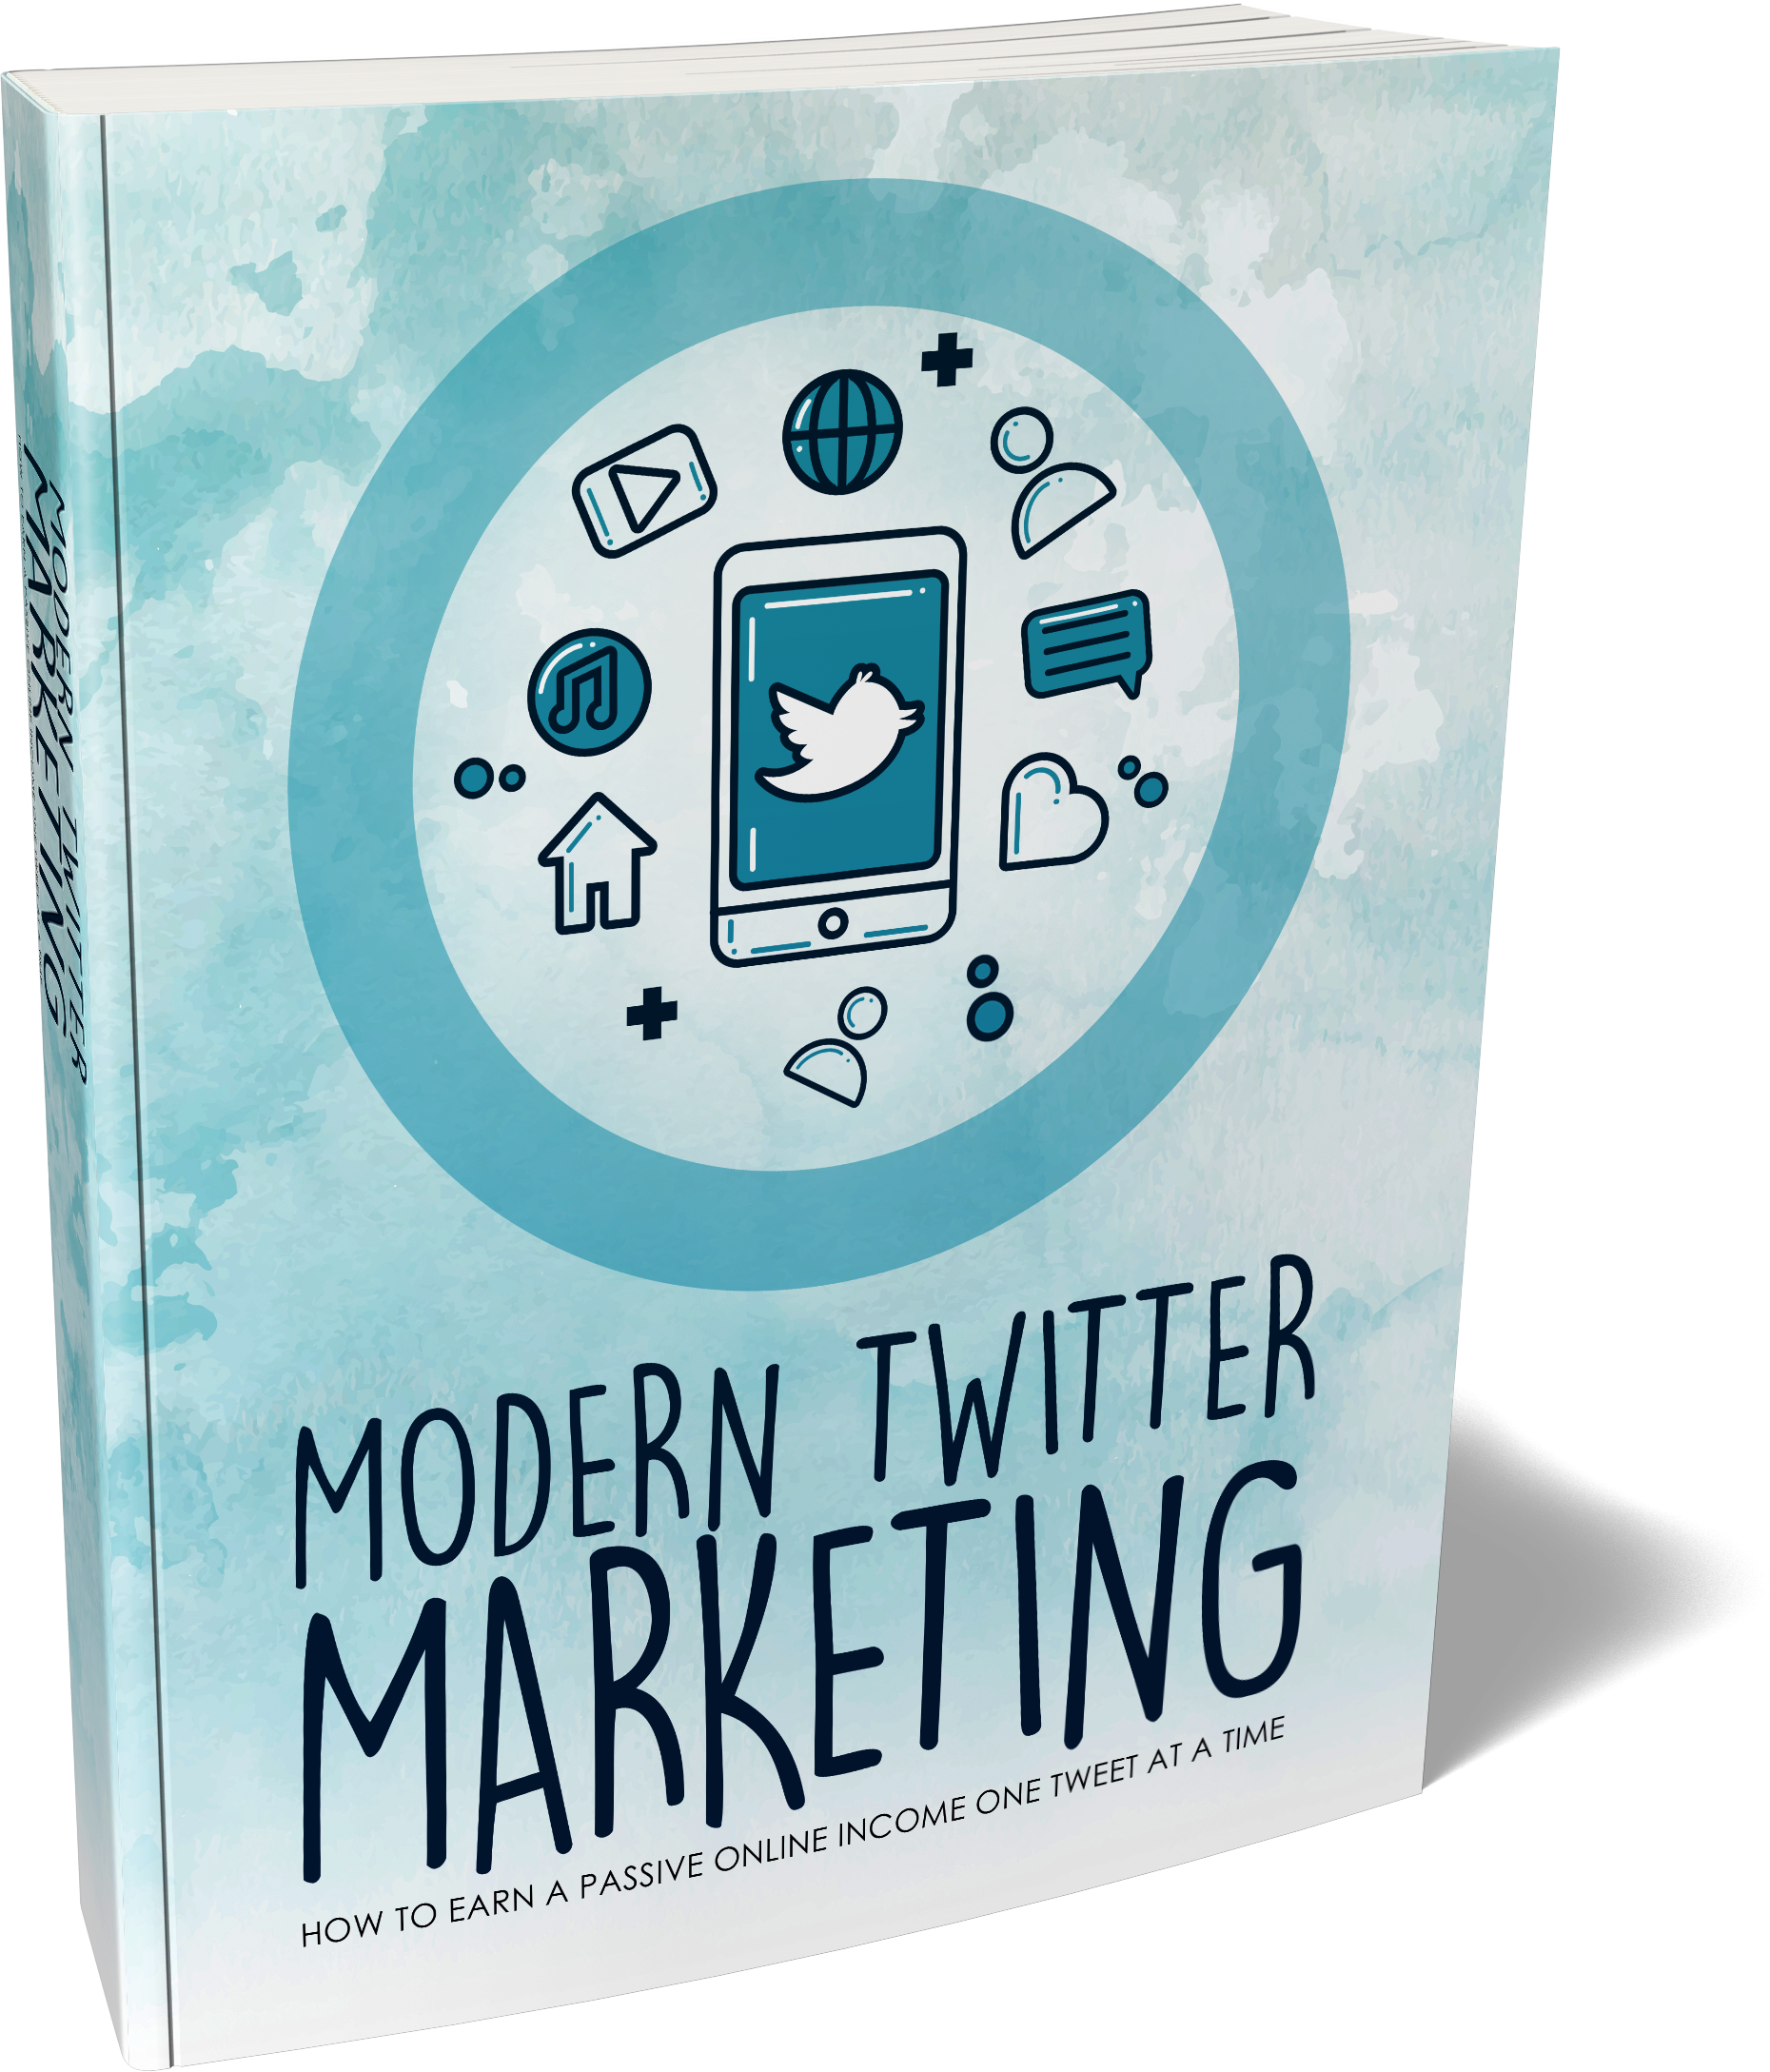 Modern Twitter Marketing 2021 Training Guide